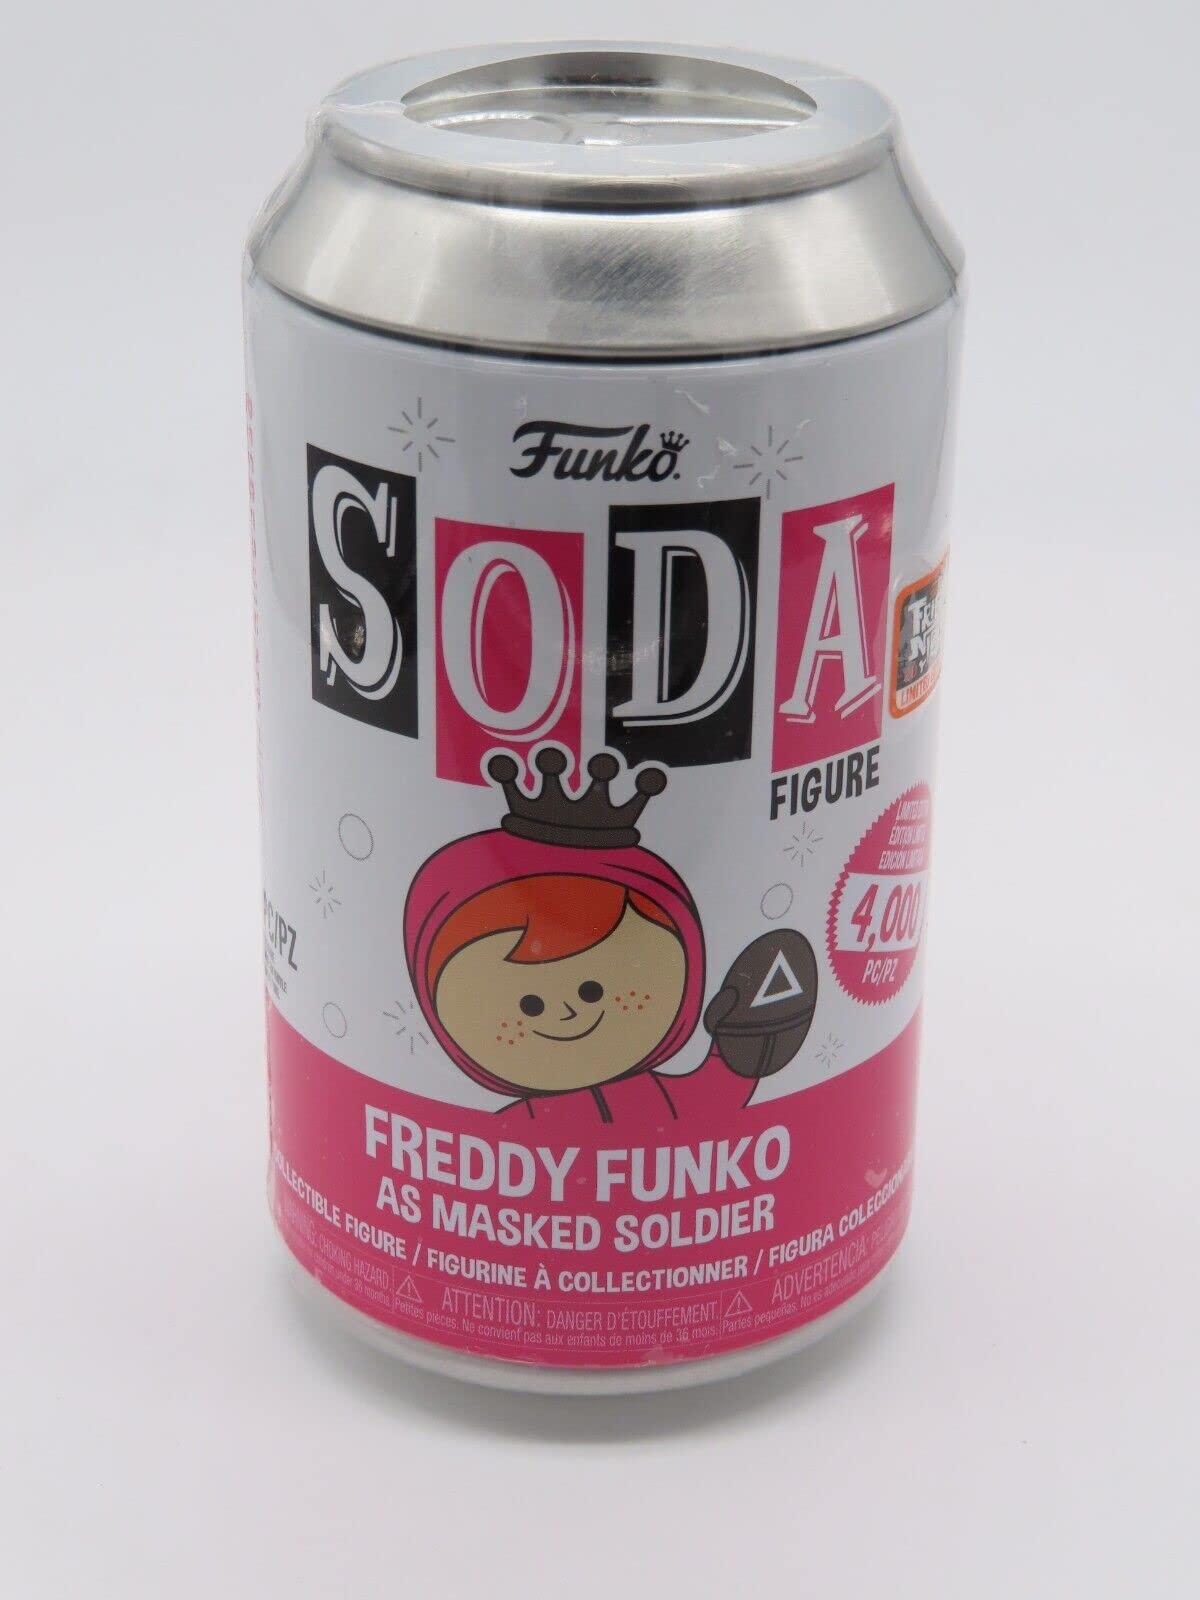 Funko SODA Fright Night Freddy Funko as Masked Soldier Figure Limited Edition 4000